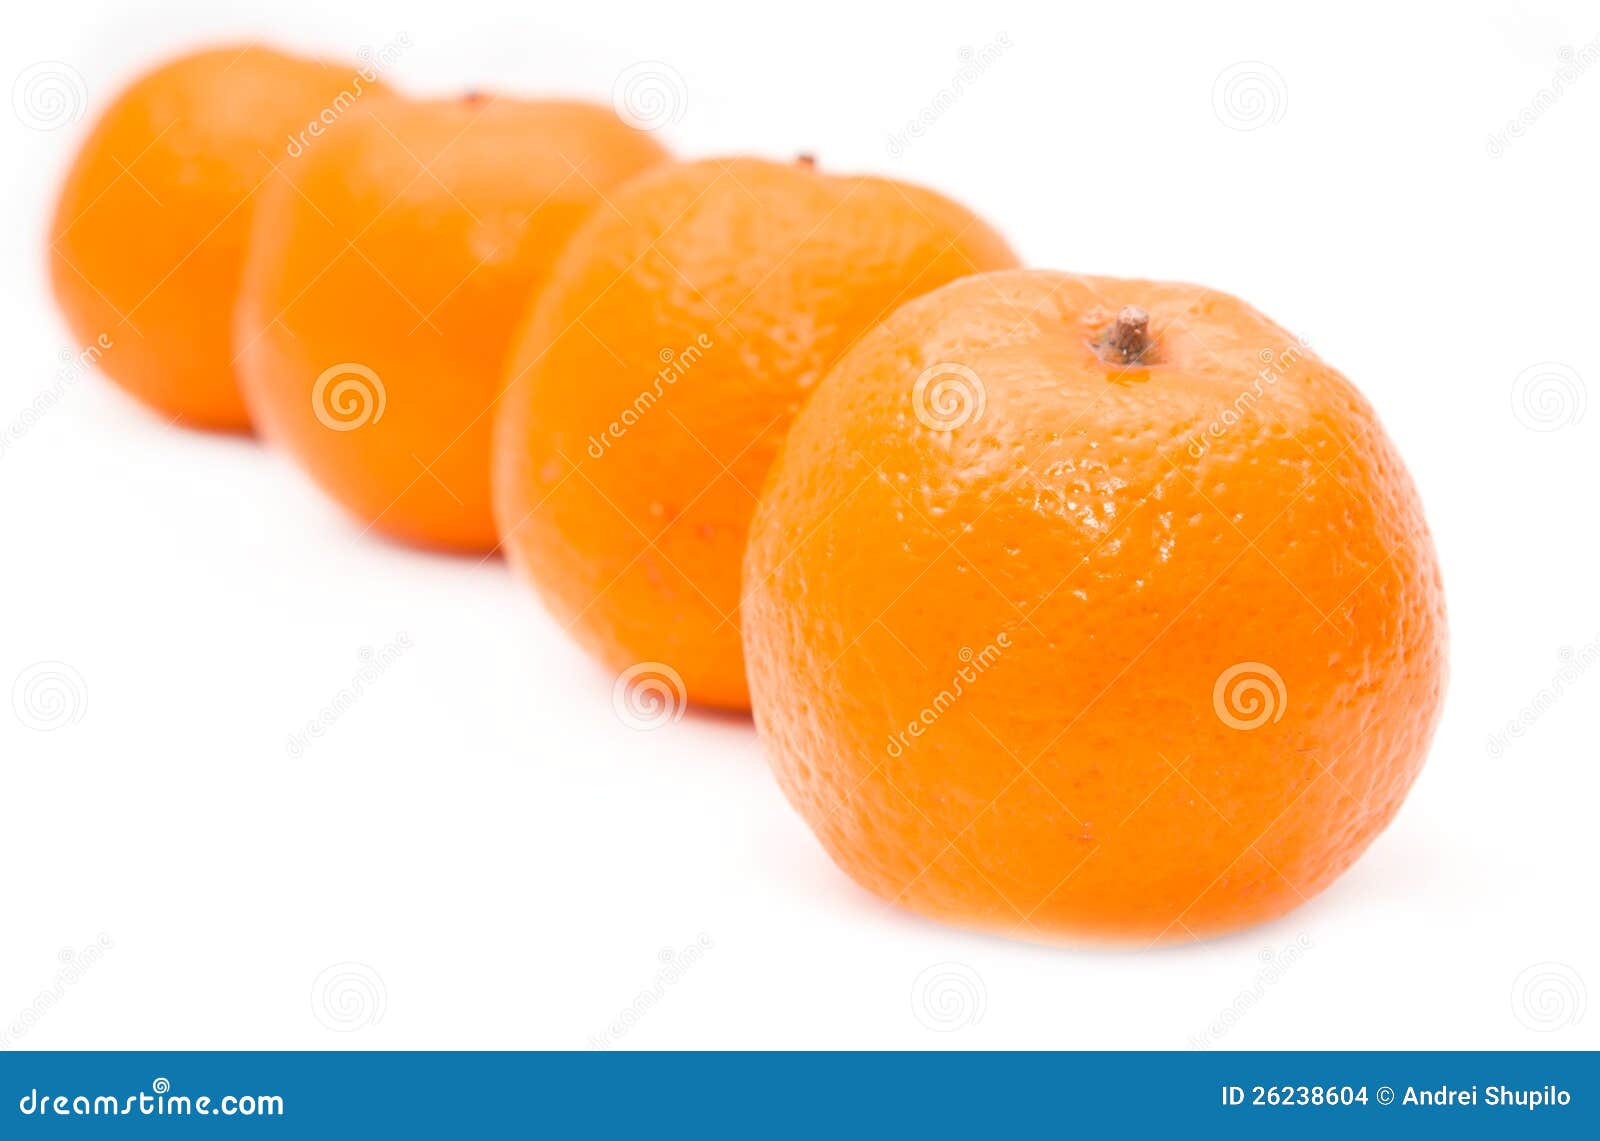 cuties mandarin oranges